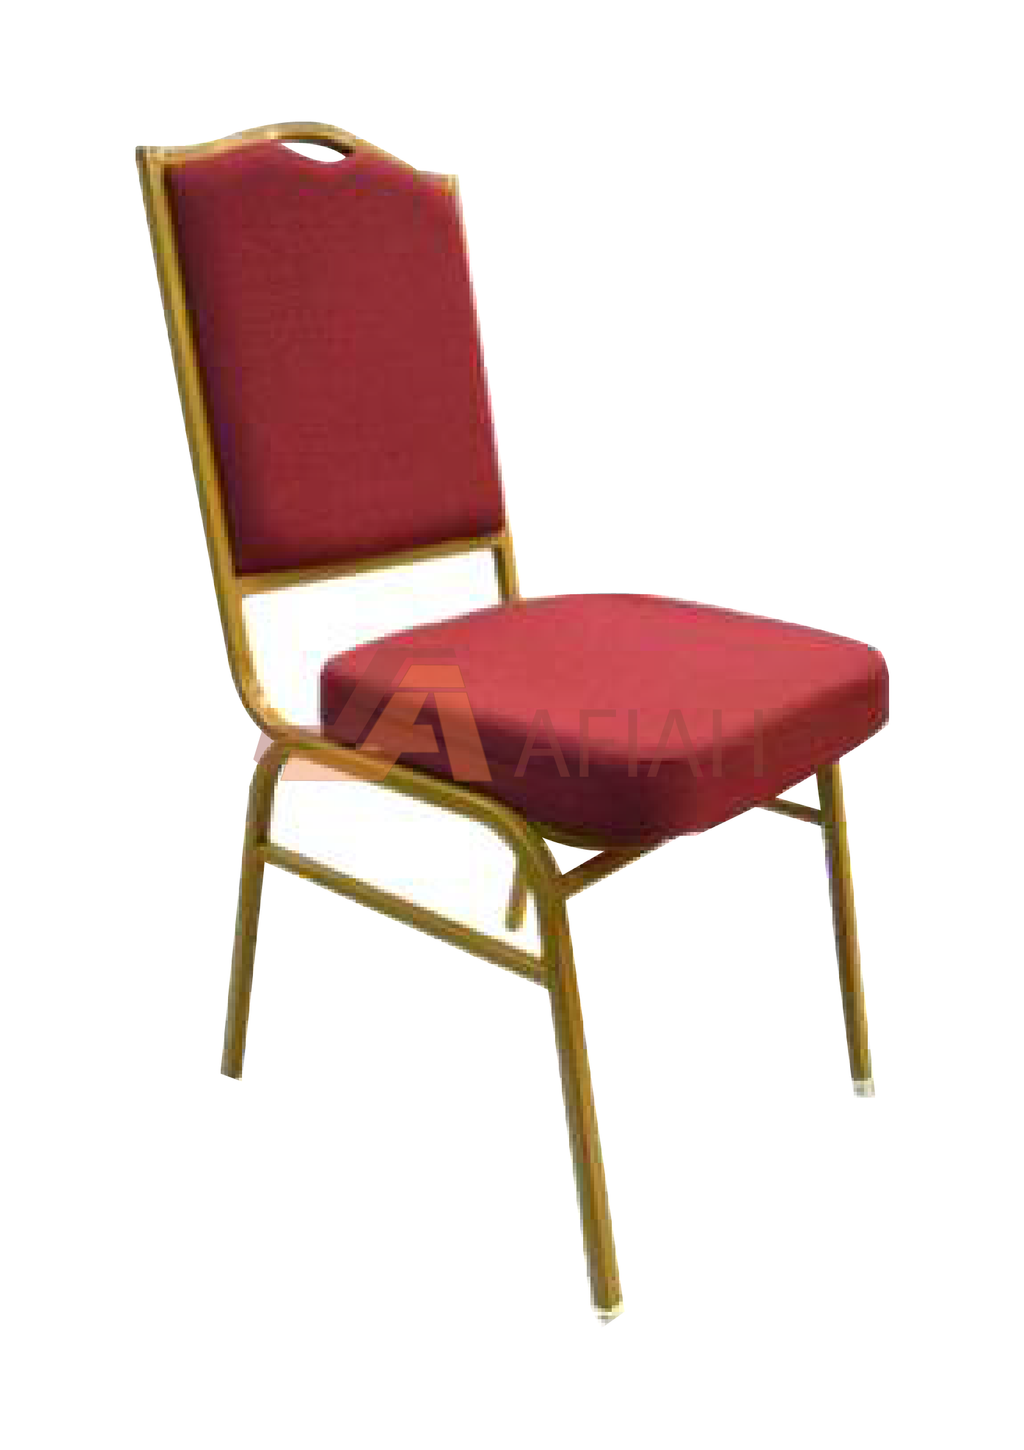 Banquet Chair - Afia Manufacturing Sdn Bhd, Afiah Trading Company